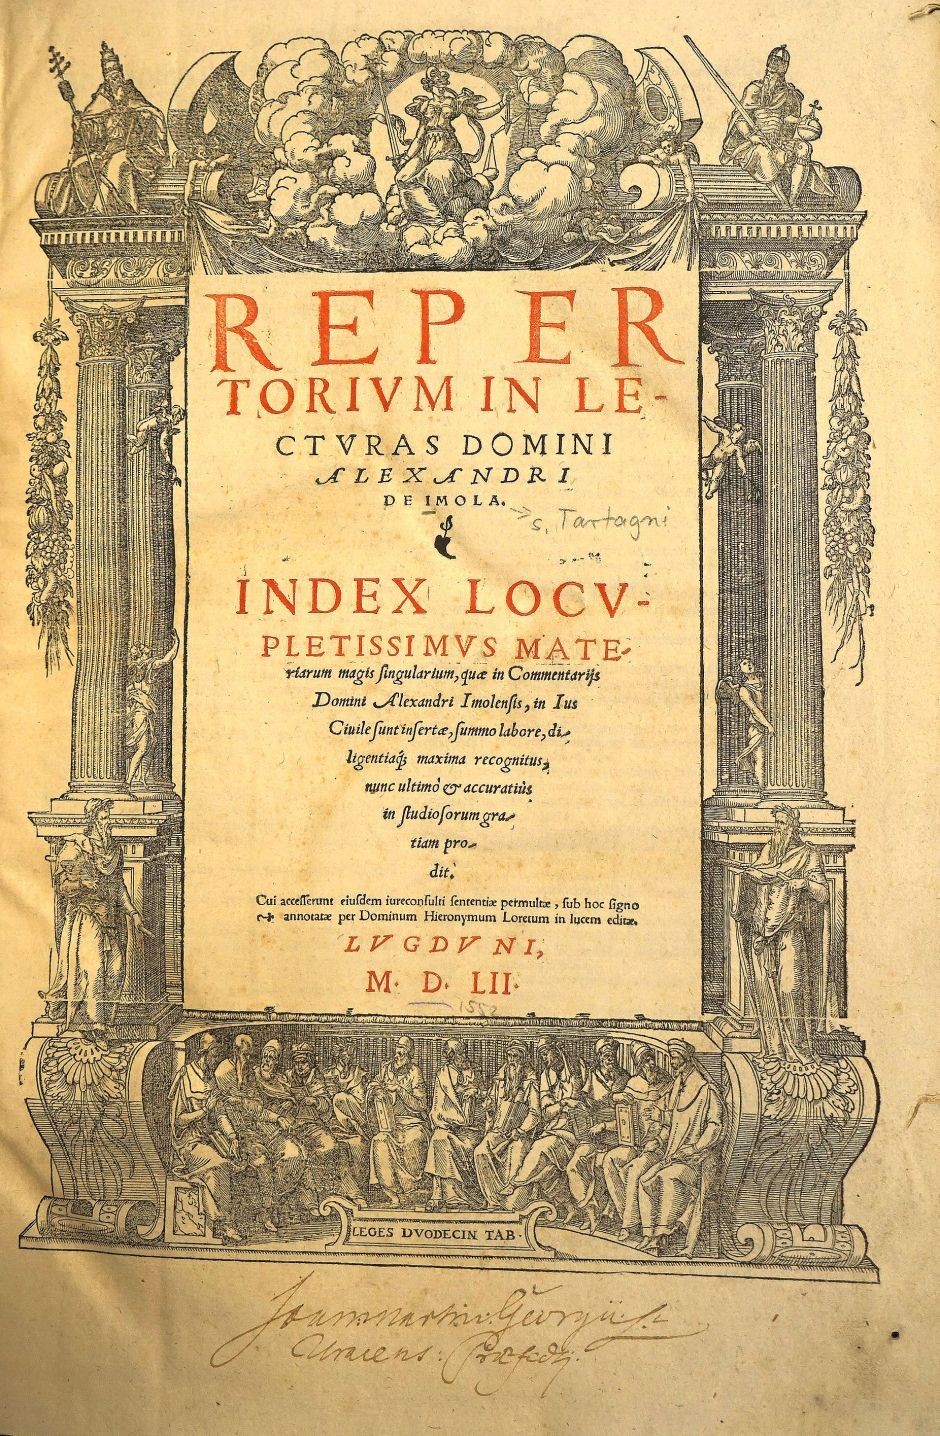 Lot 1037, Auction  115, Alexander de Imola, Repertorium in lecturas domini